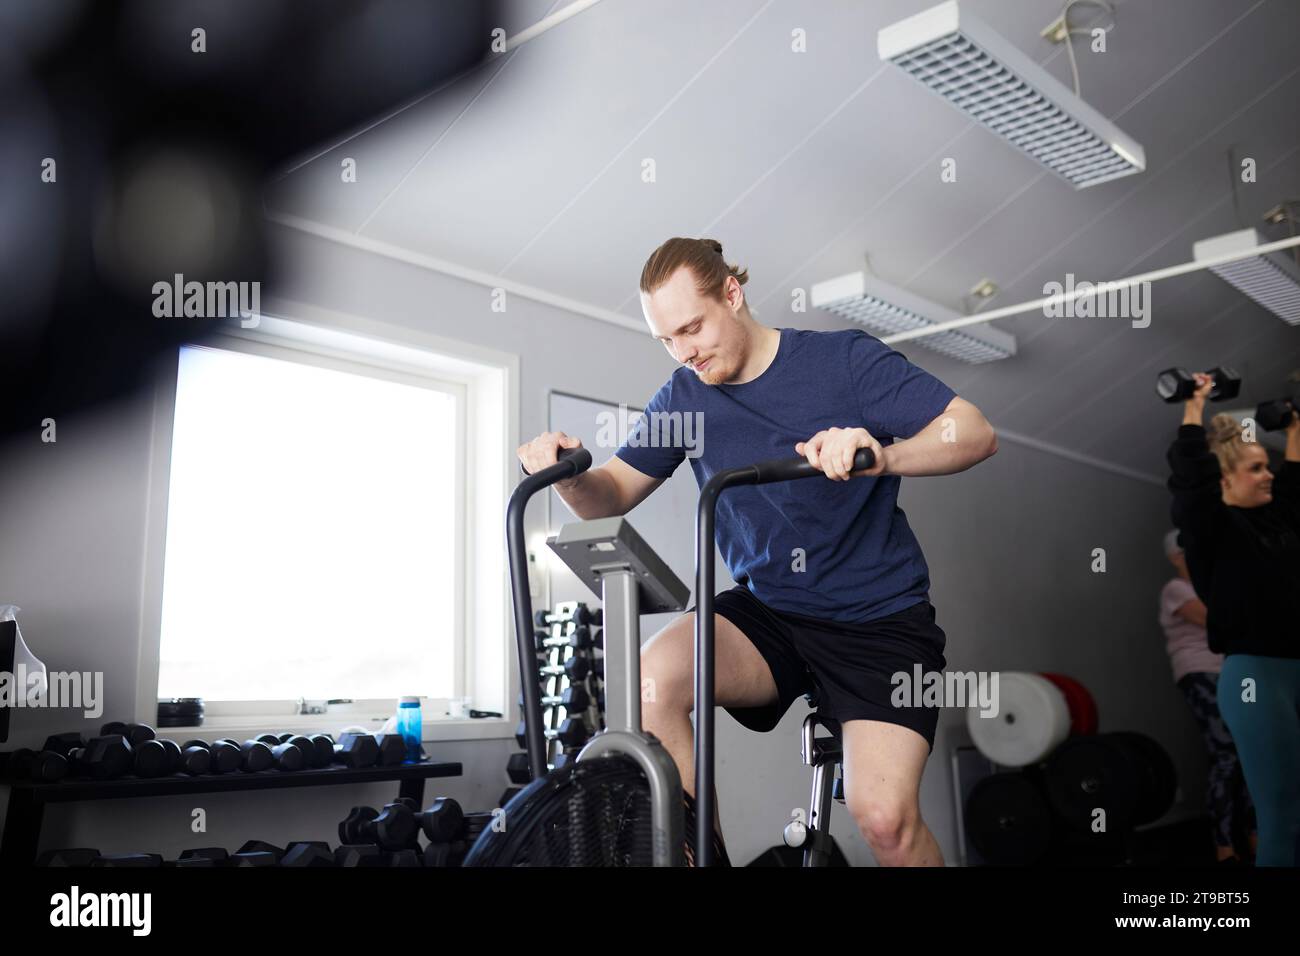 Man exercising on gym bike at health club Stock Photo